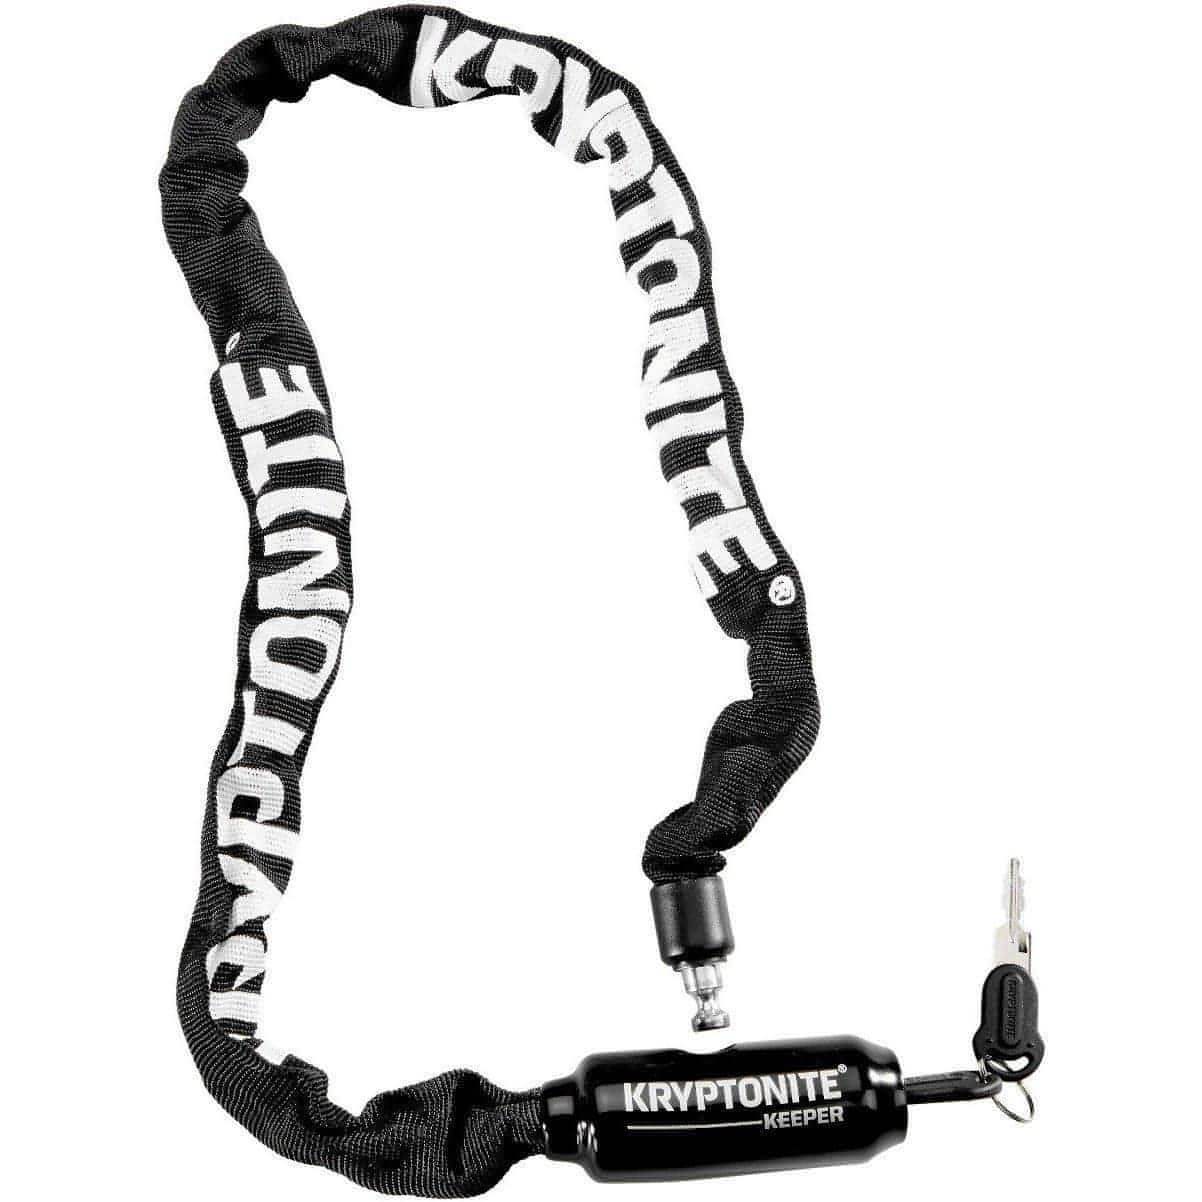 Kryptonite Keeper 585 Integrated Chain Lock 85cm 720018004912 - Start Fitness